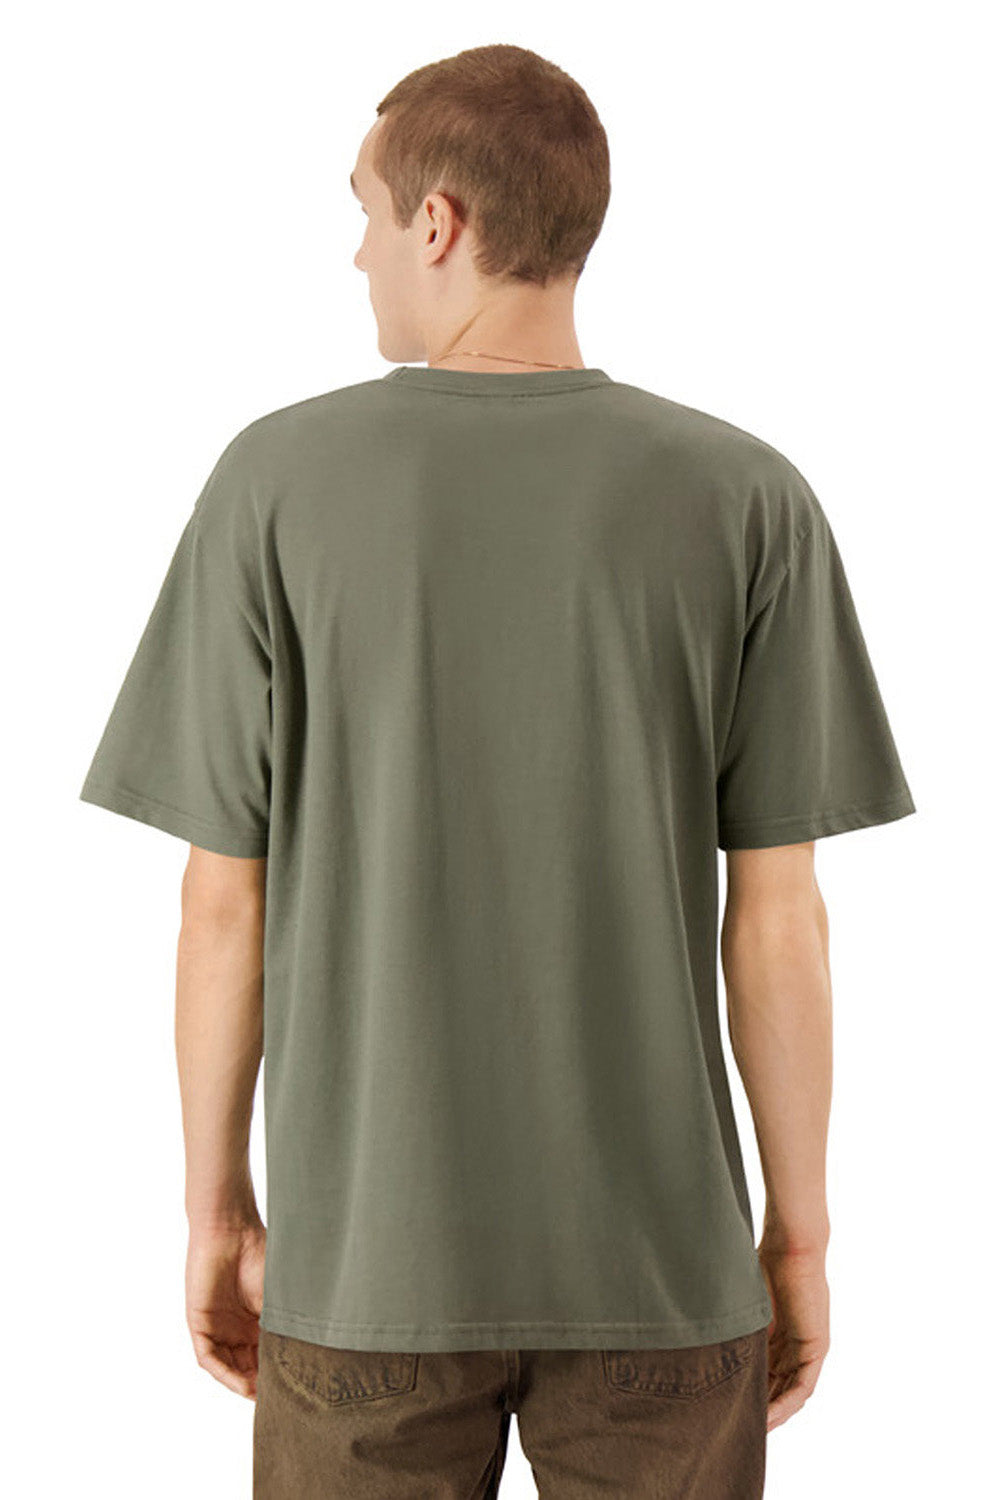 American Apparel 5389 Mens Sueded Cloud Short Sleeve Crewneck T-Shirt Lieutenant Green Model Back